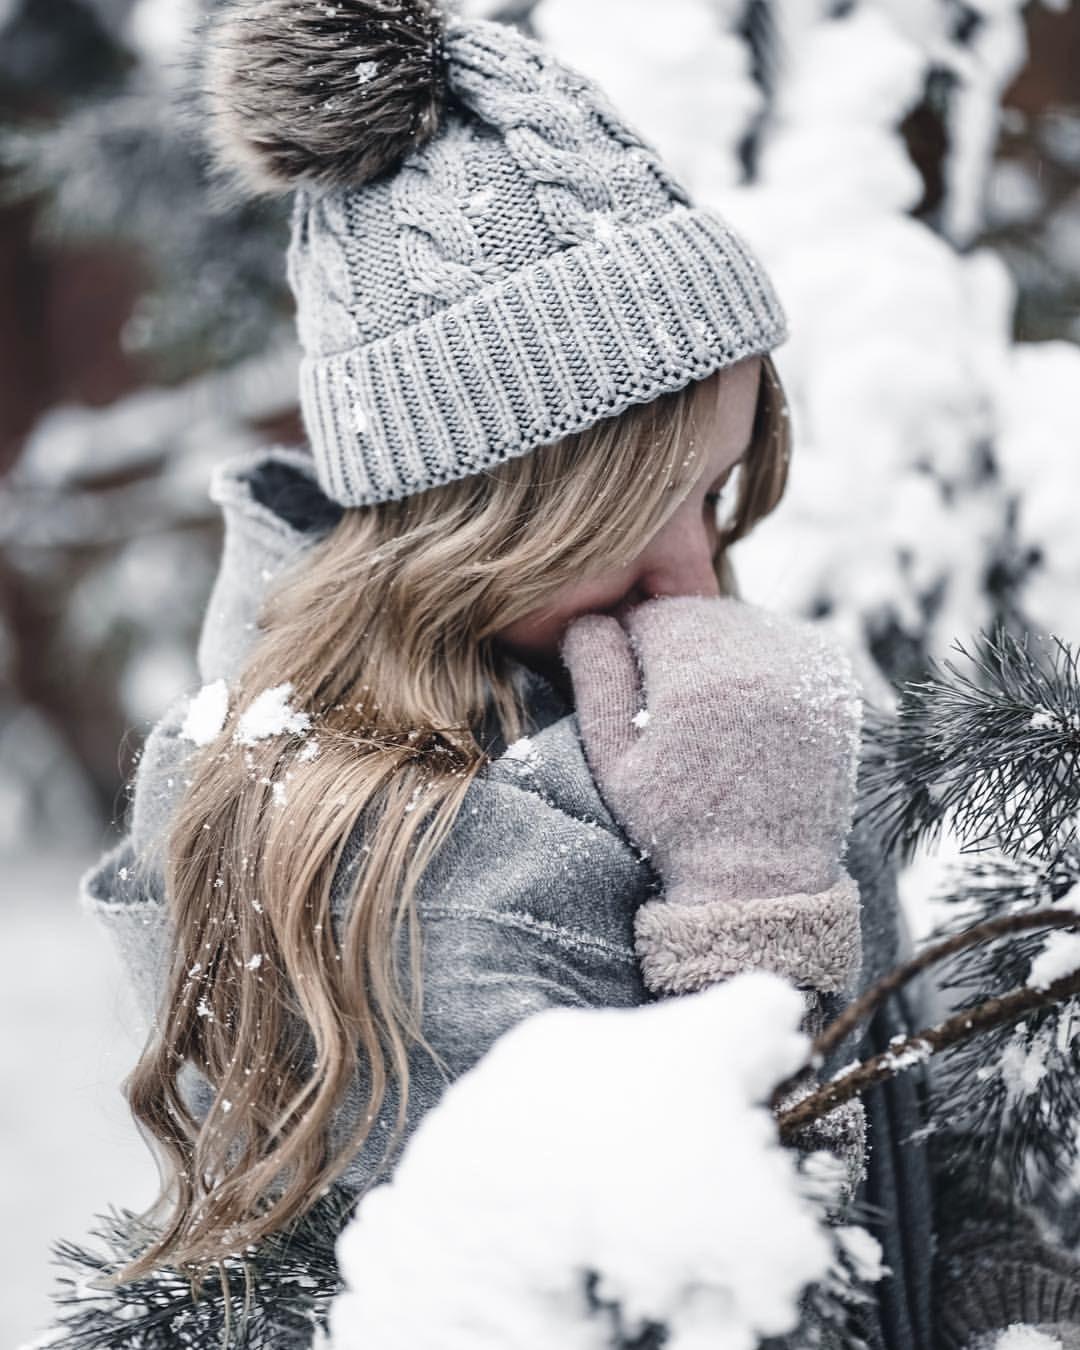 путешествия▪️фотоидеи▪️рецепты (@yrslvnsh) • Фото и видео в Instagram |  Winter portraits, Winter senior pictures, Winter photography